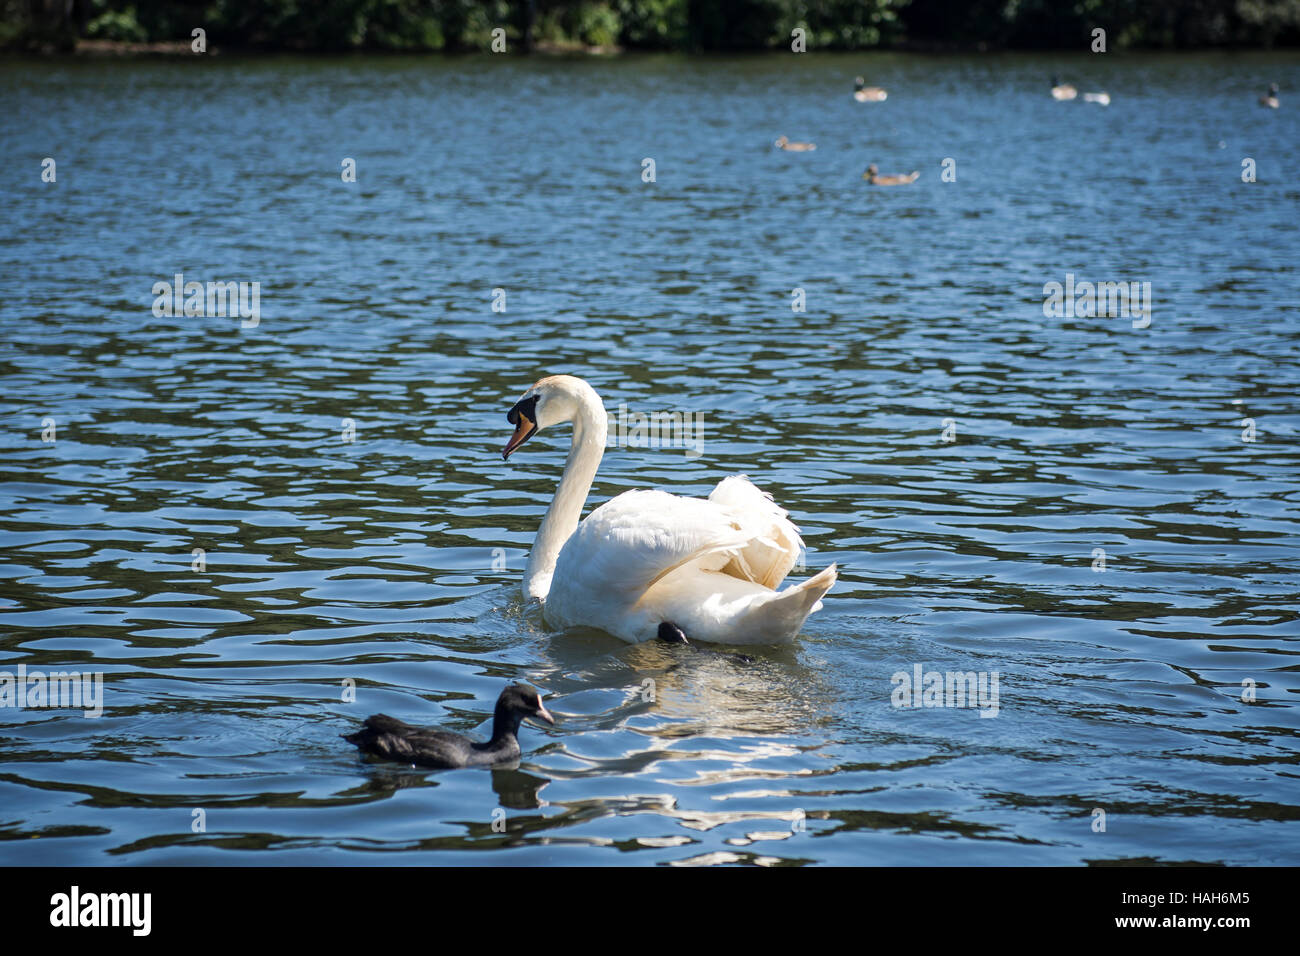 Swan swimming in lake Stock Photo